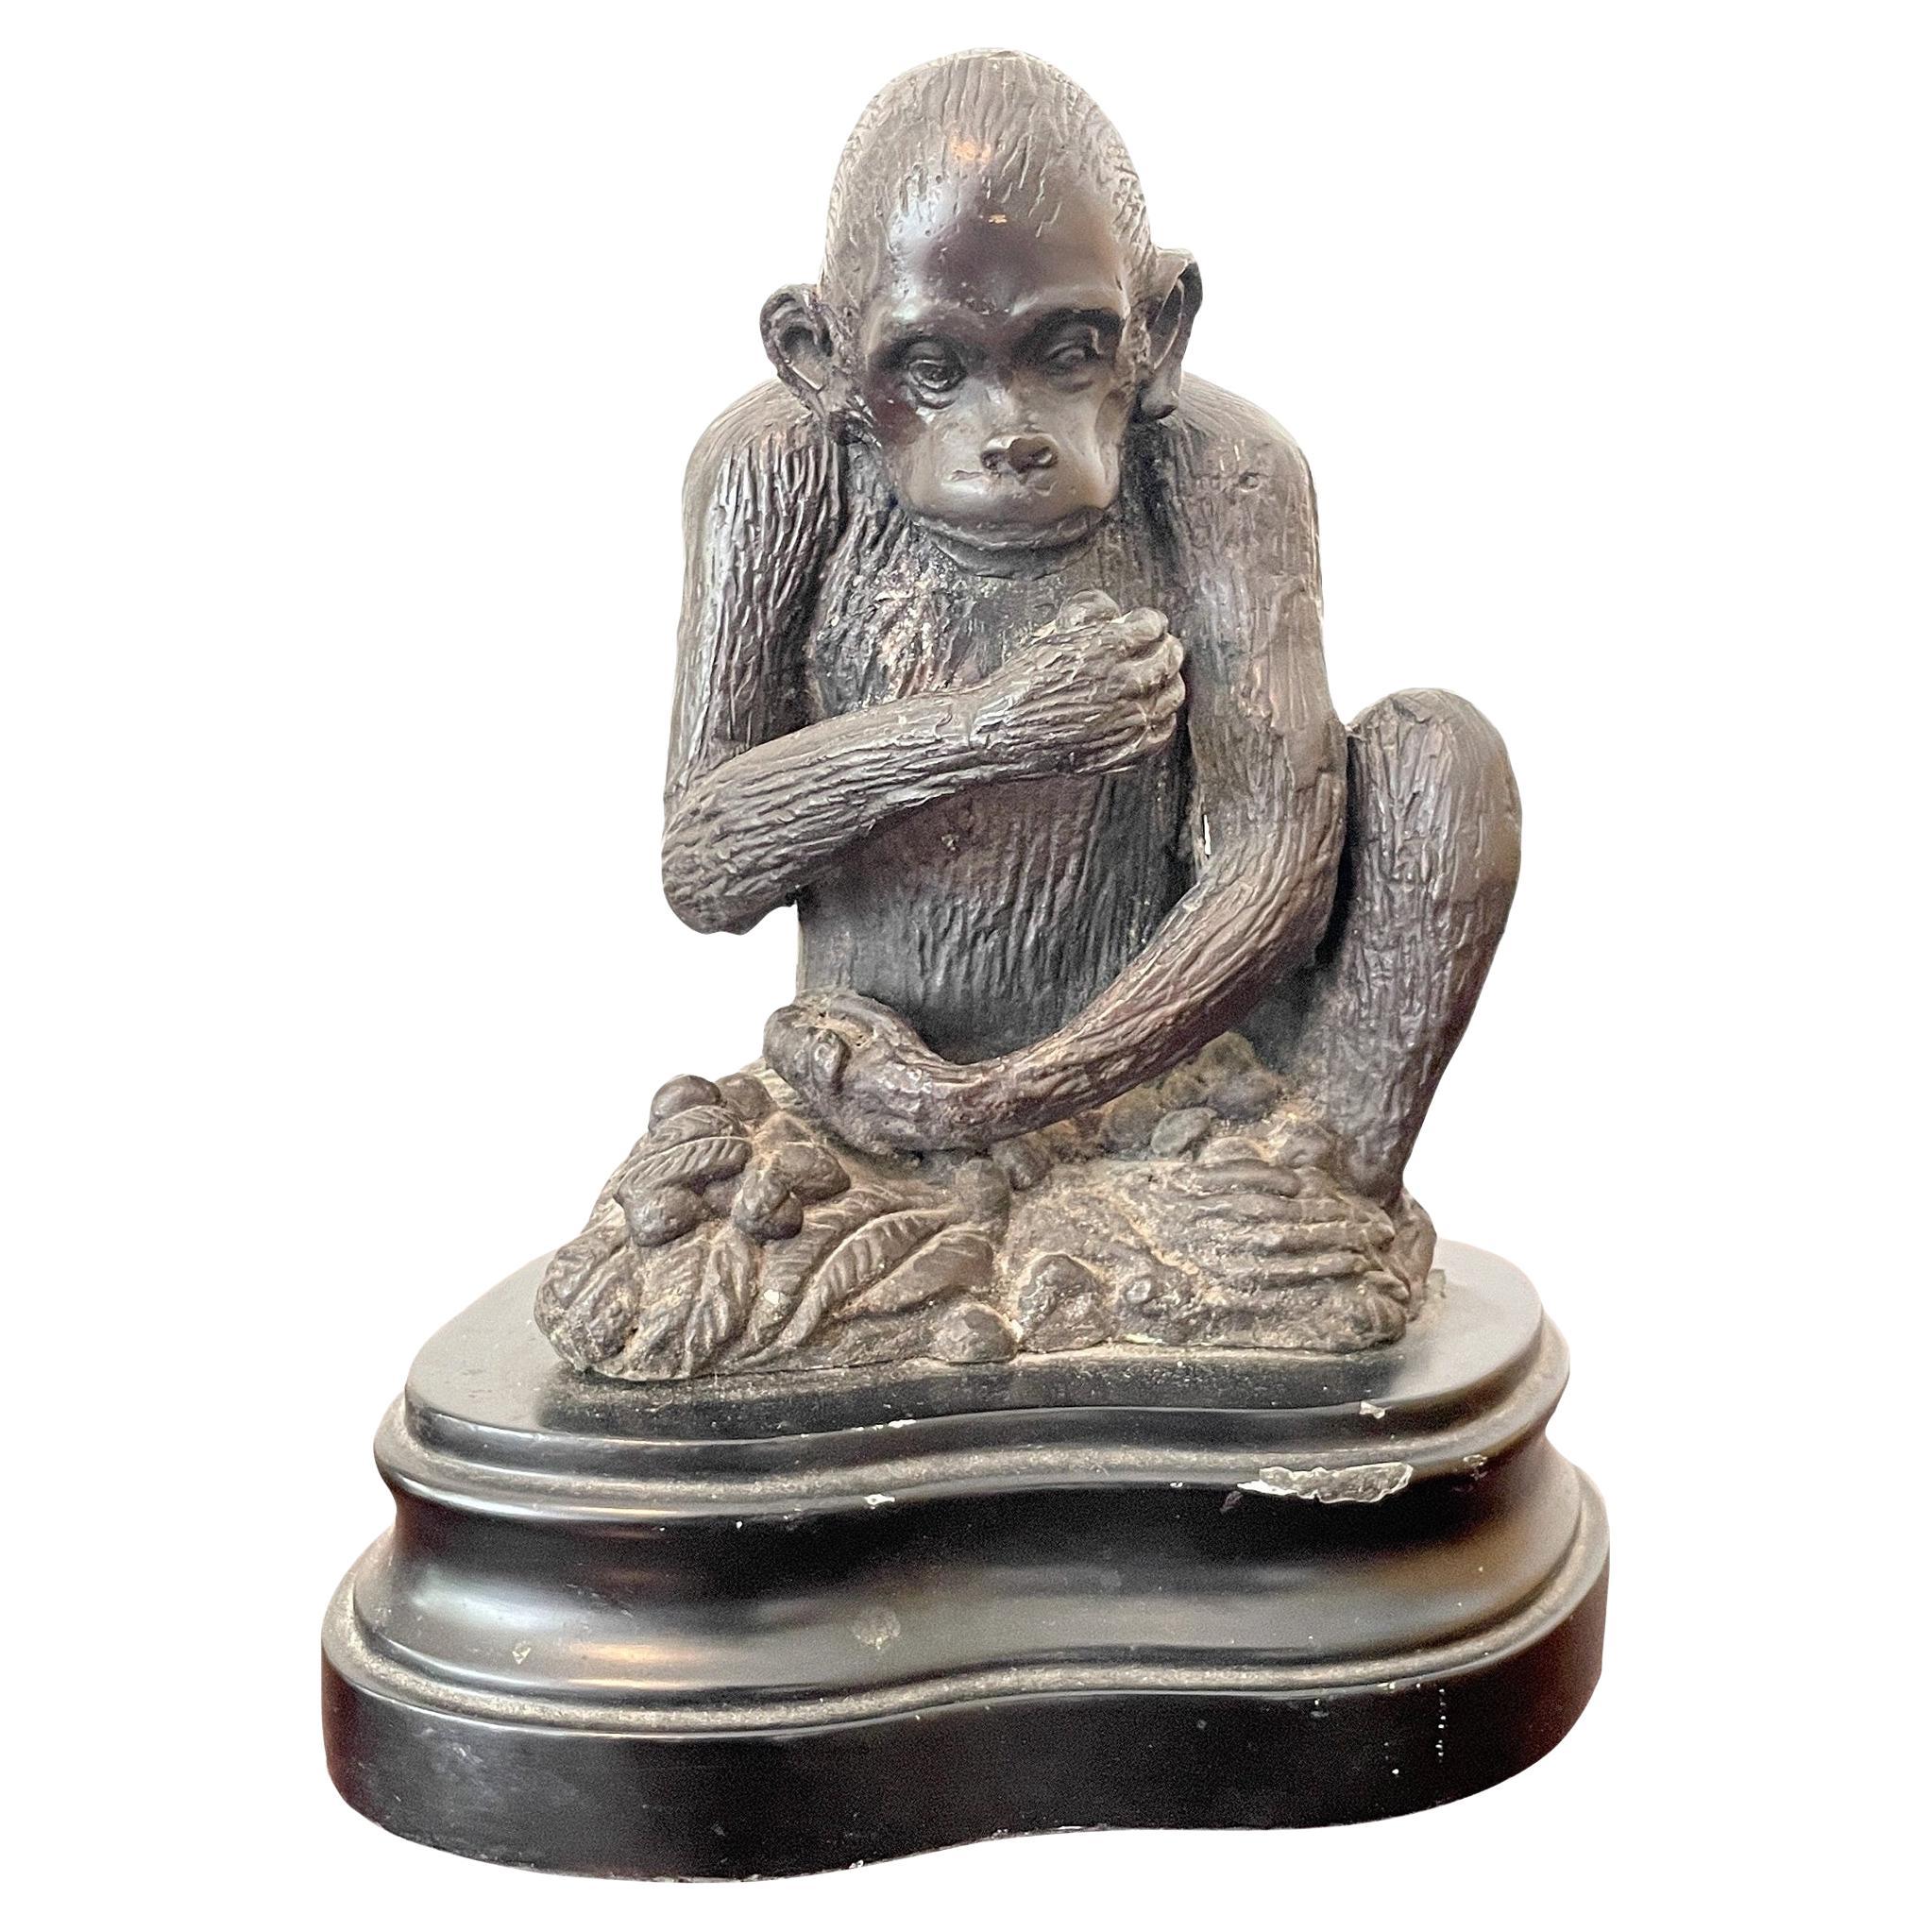 Miniature Bronze Statue of a Monkey on a Base